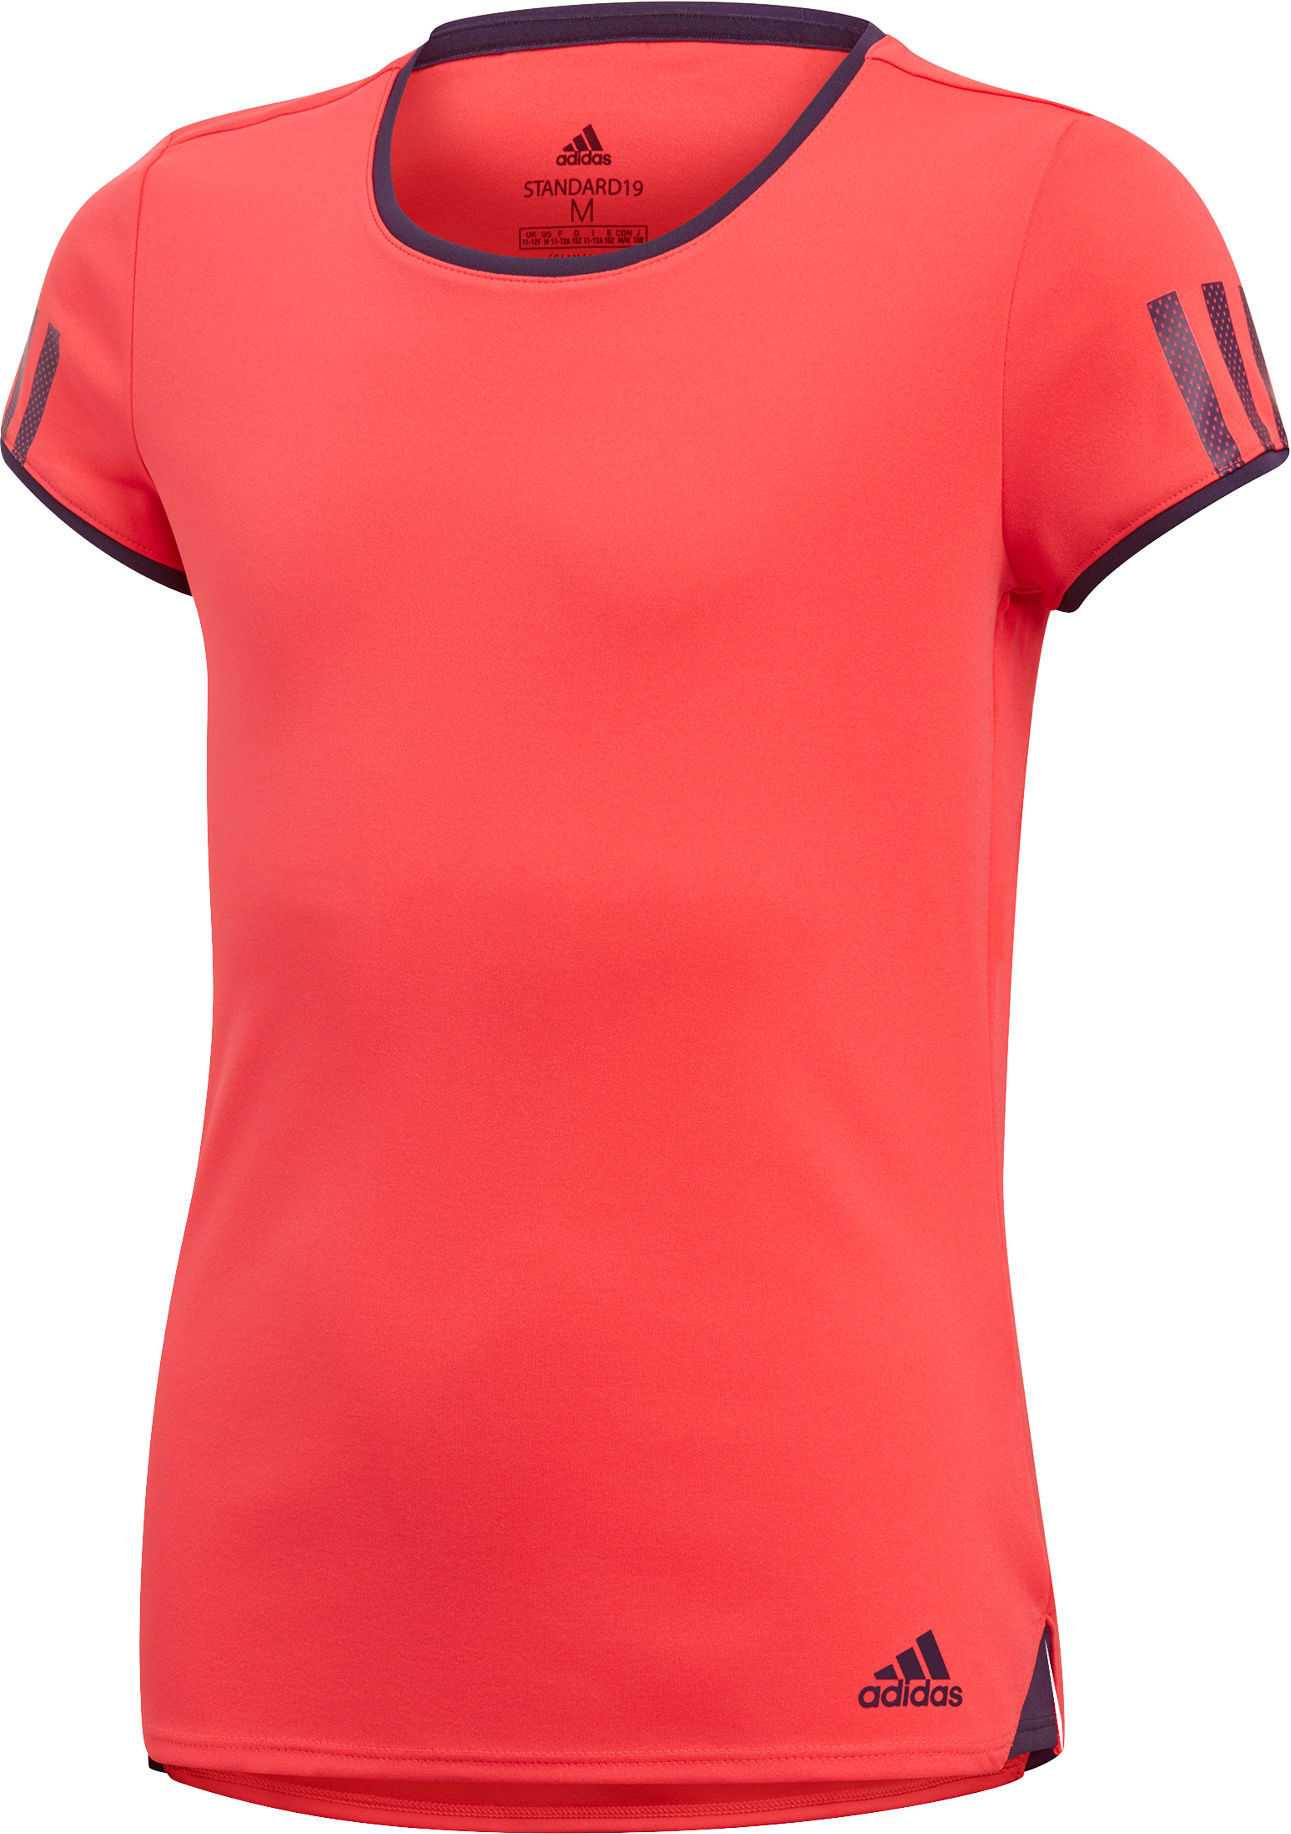 Adidas Girls Club T-shirt Träningströja Coral 164